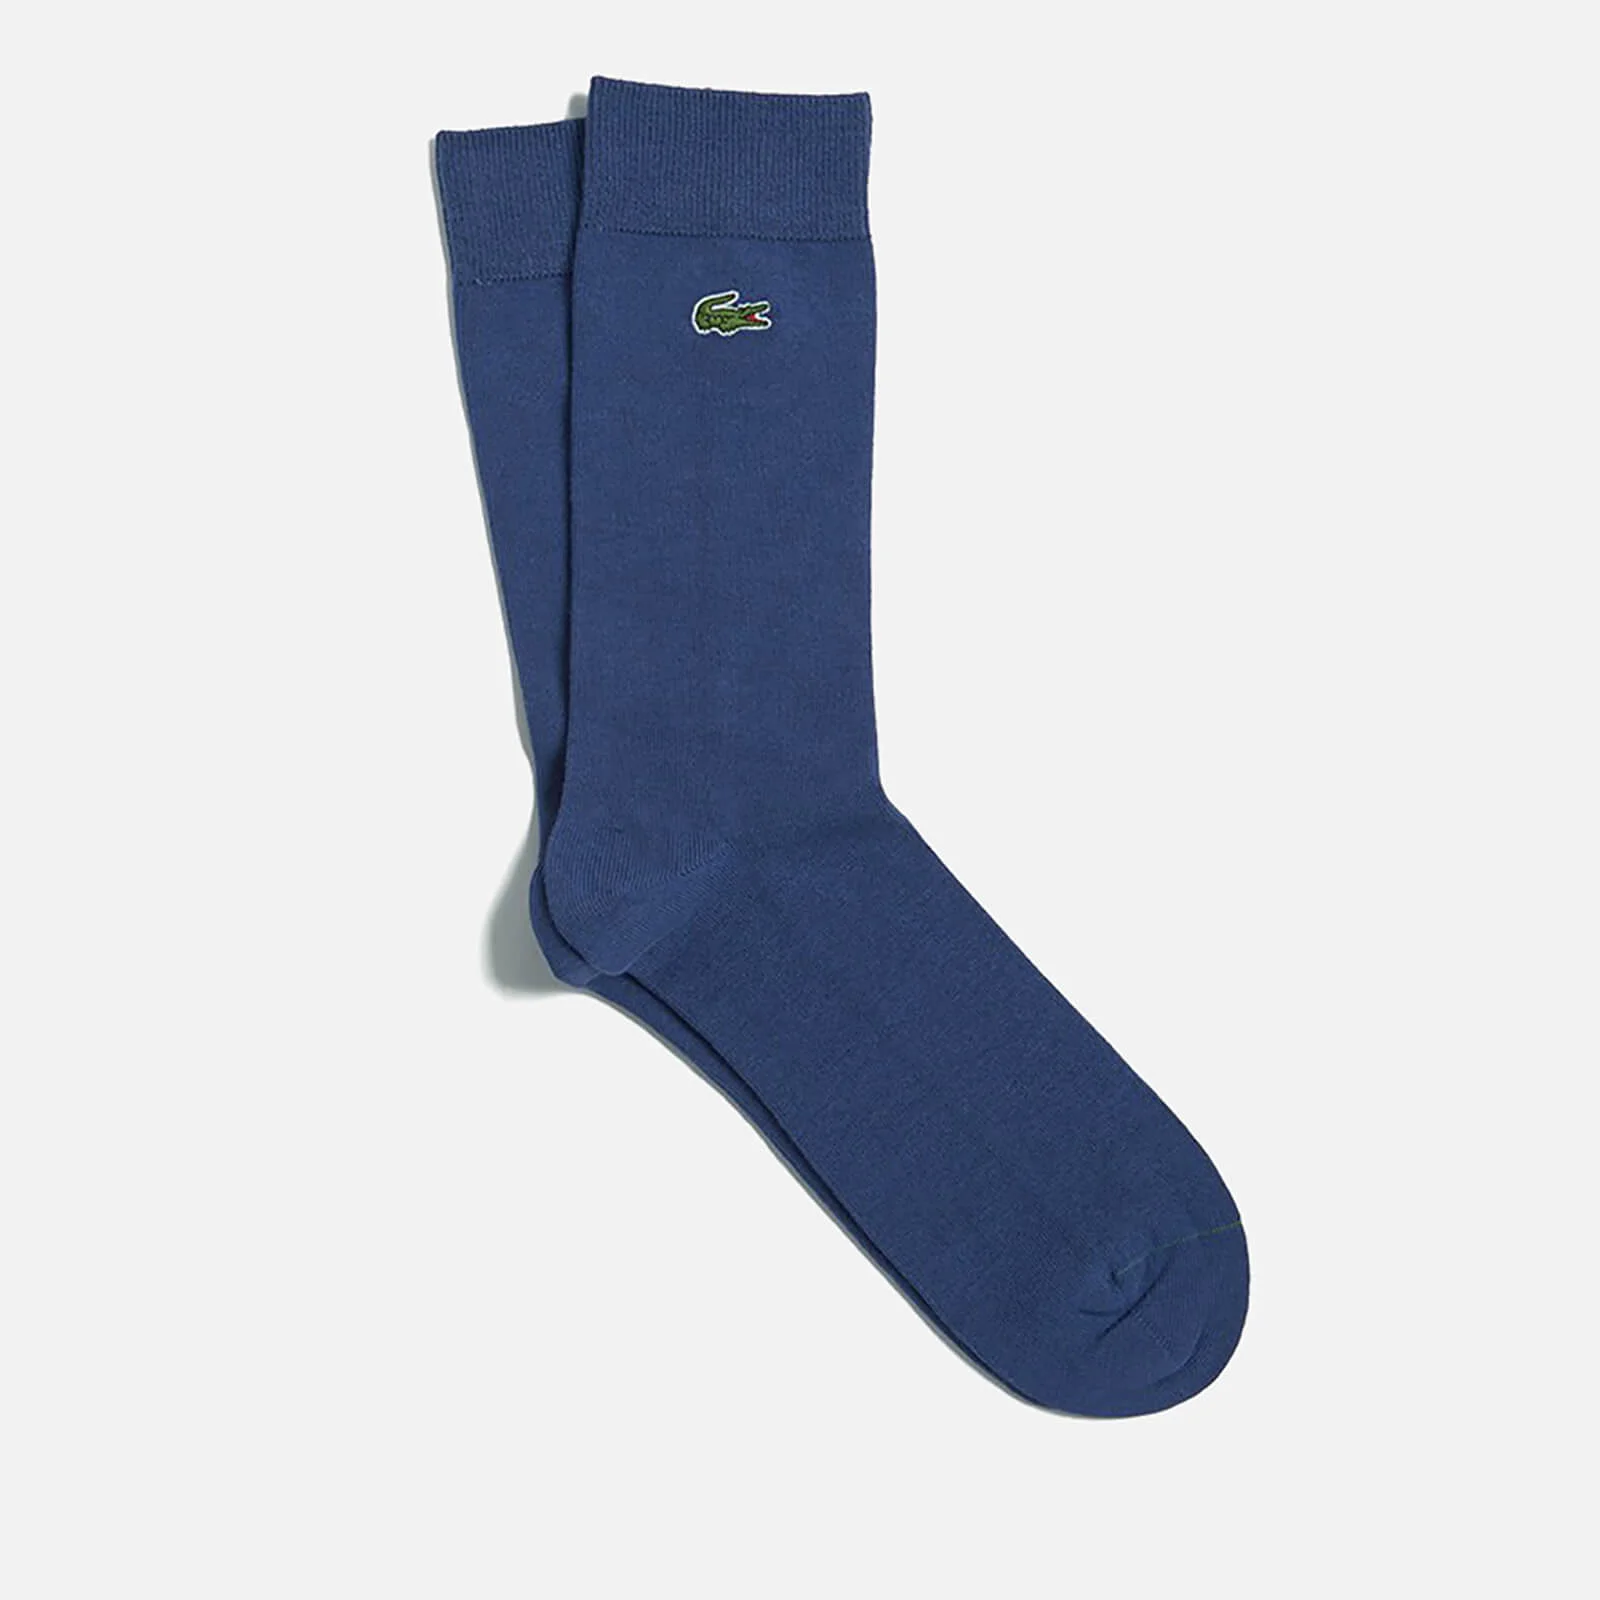 Lacoste Men's Socks - Blue Image 1